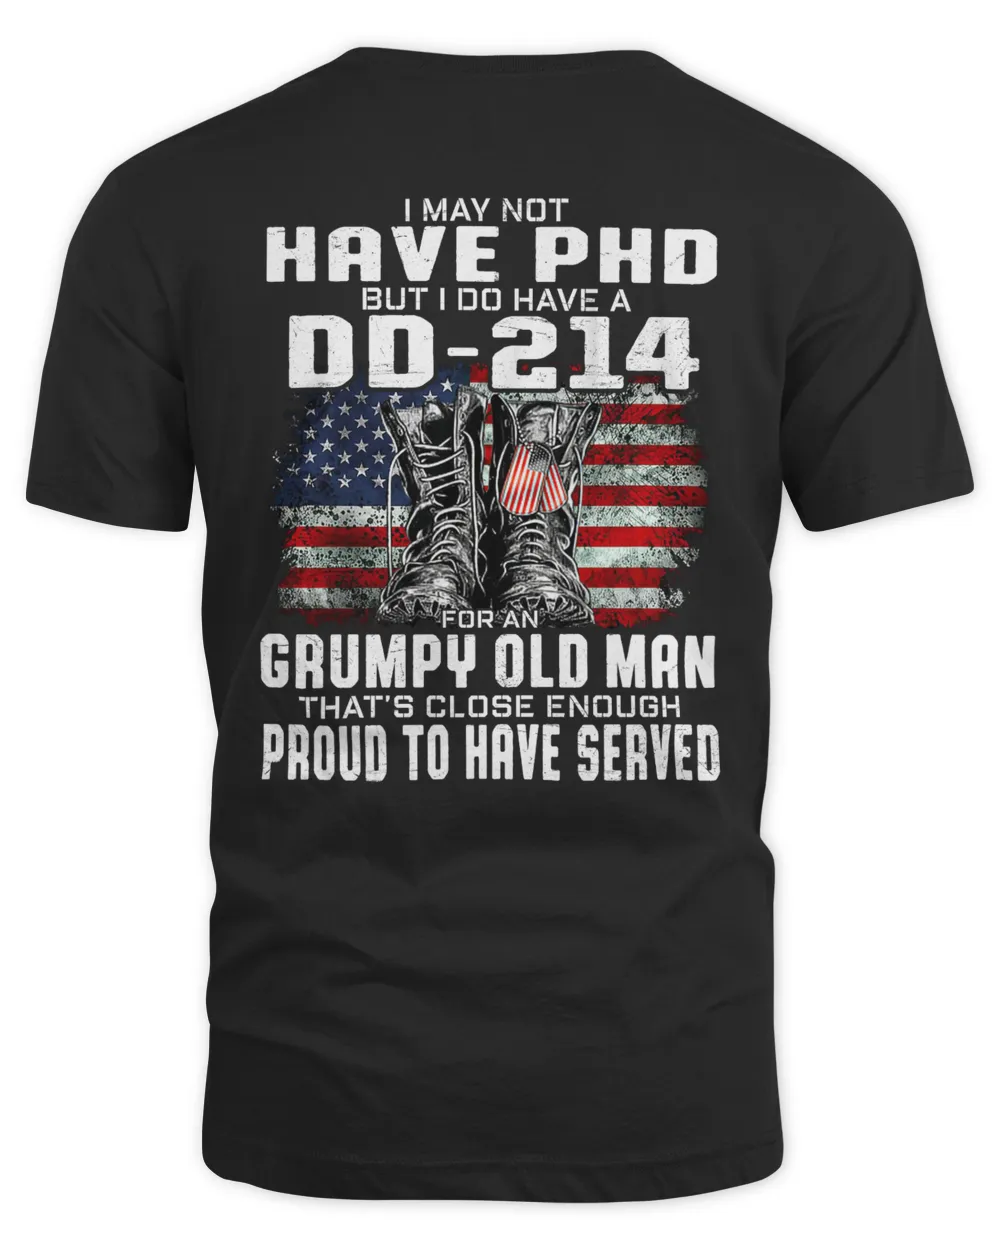 I Do Have DD-214, U.S Veterans (Back)